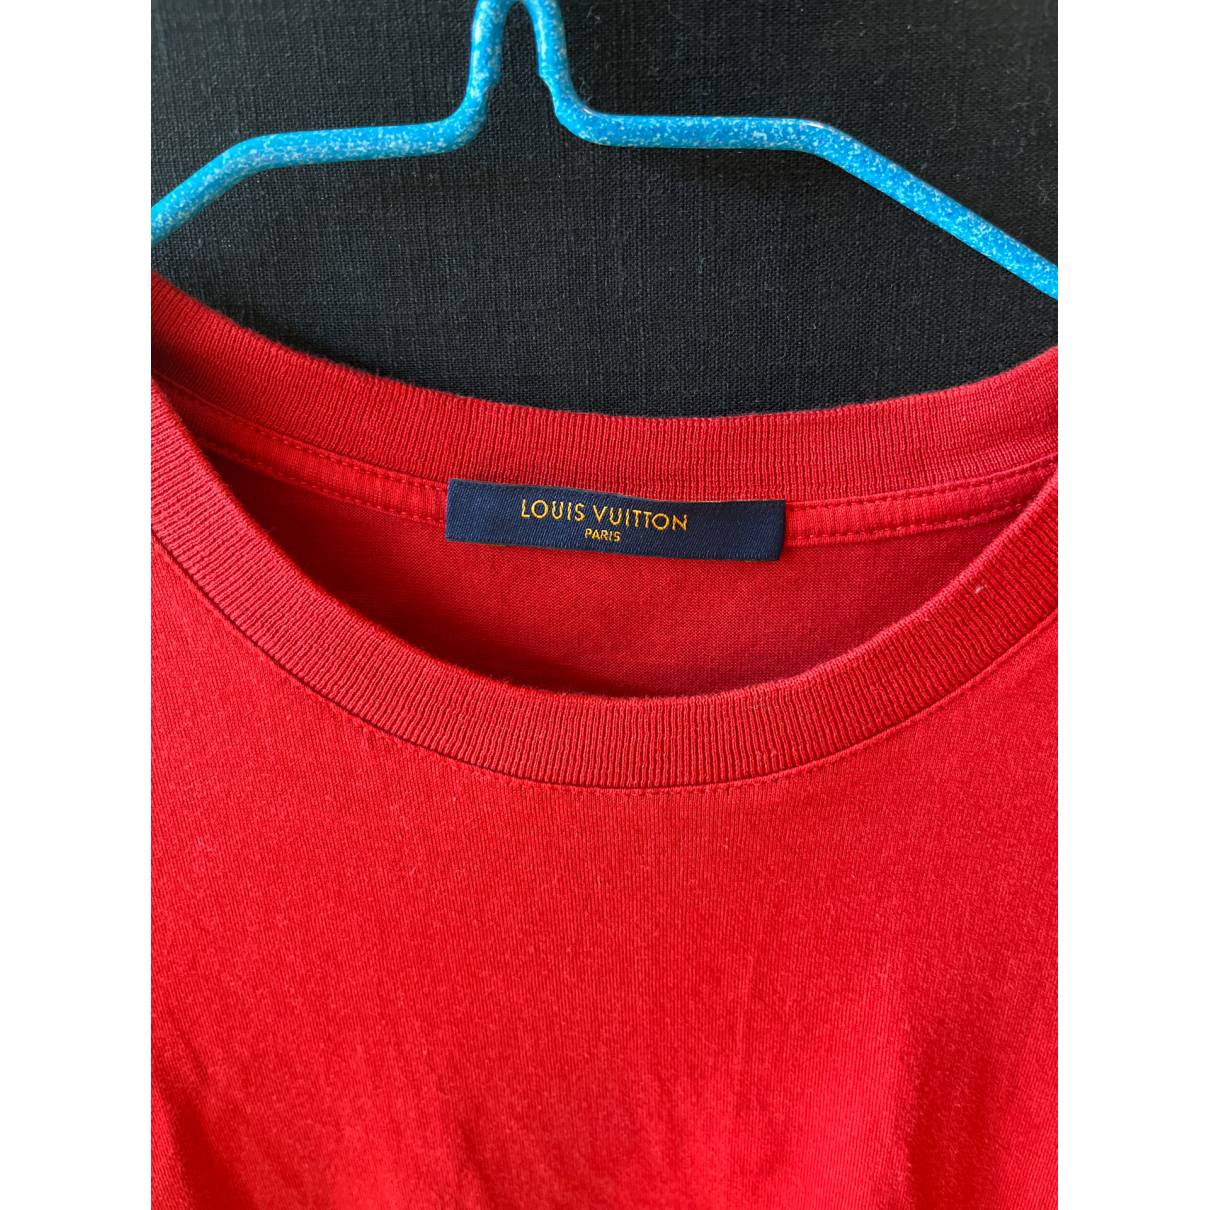 T-shirt Louis Vuitton Red size XS International in Cotton - 22860545